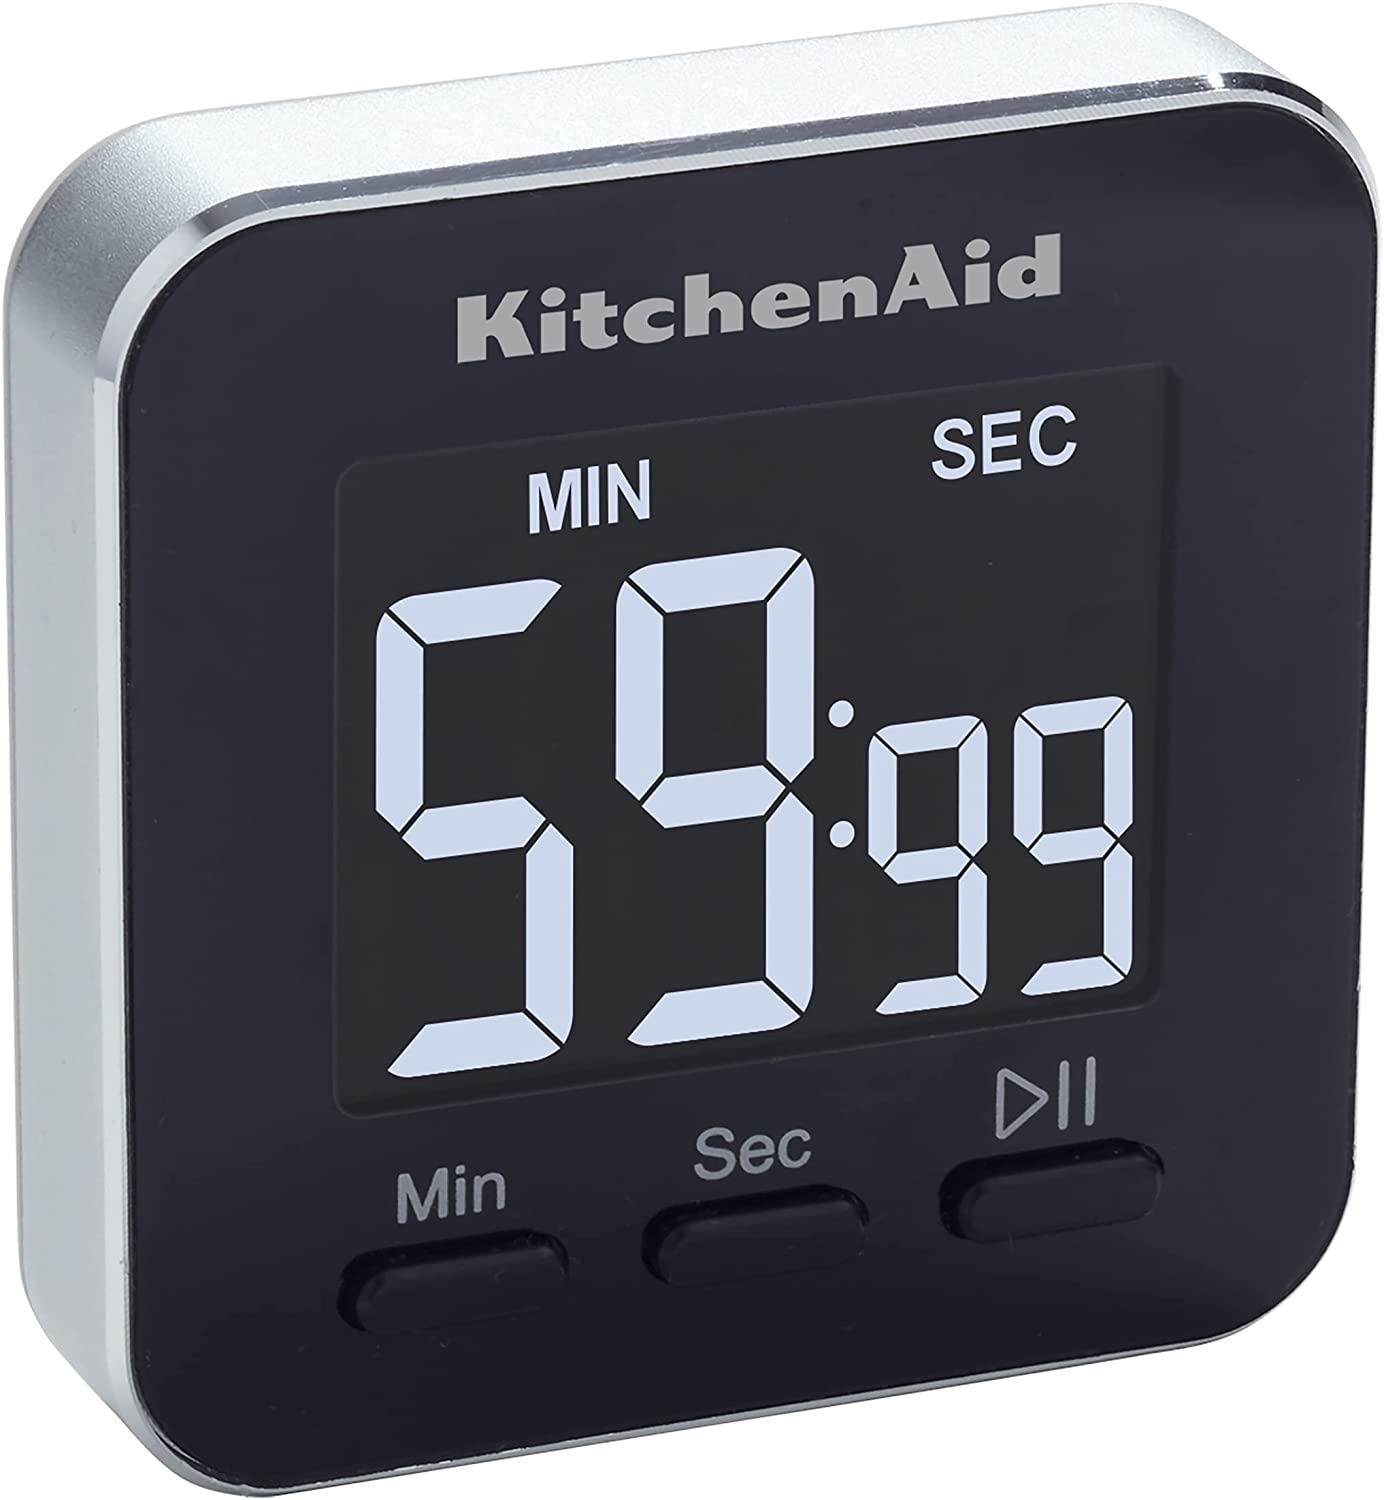 KitchenAid KQ900 Single Event Digital Timer, 2.5 inches, Black Import To Shop ×Product customization General Description